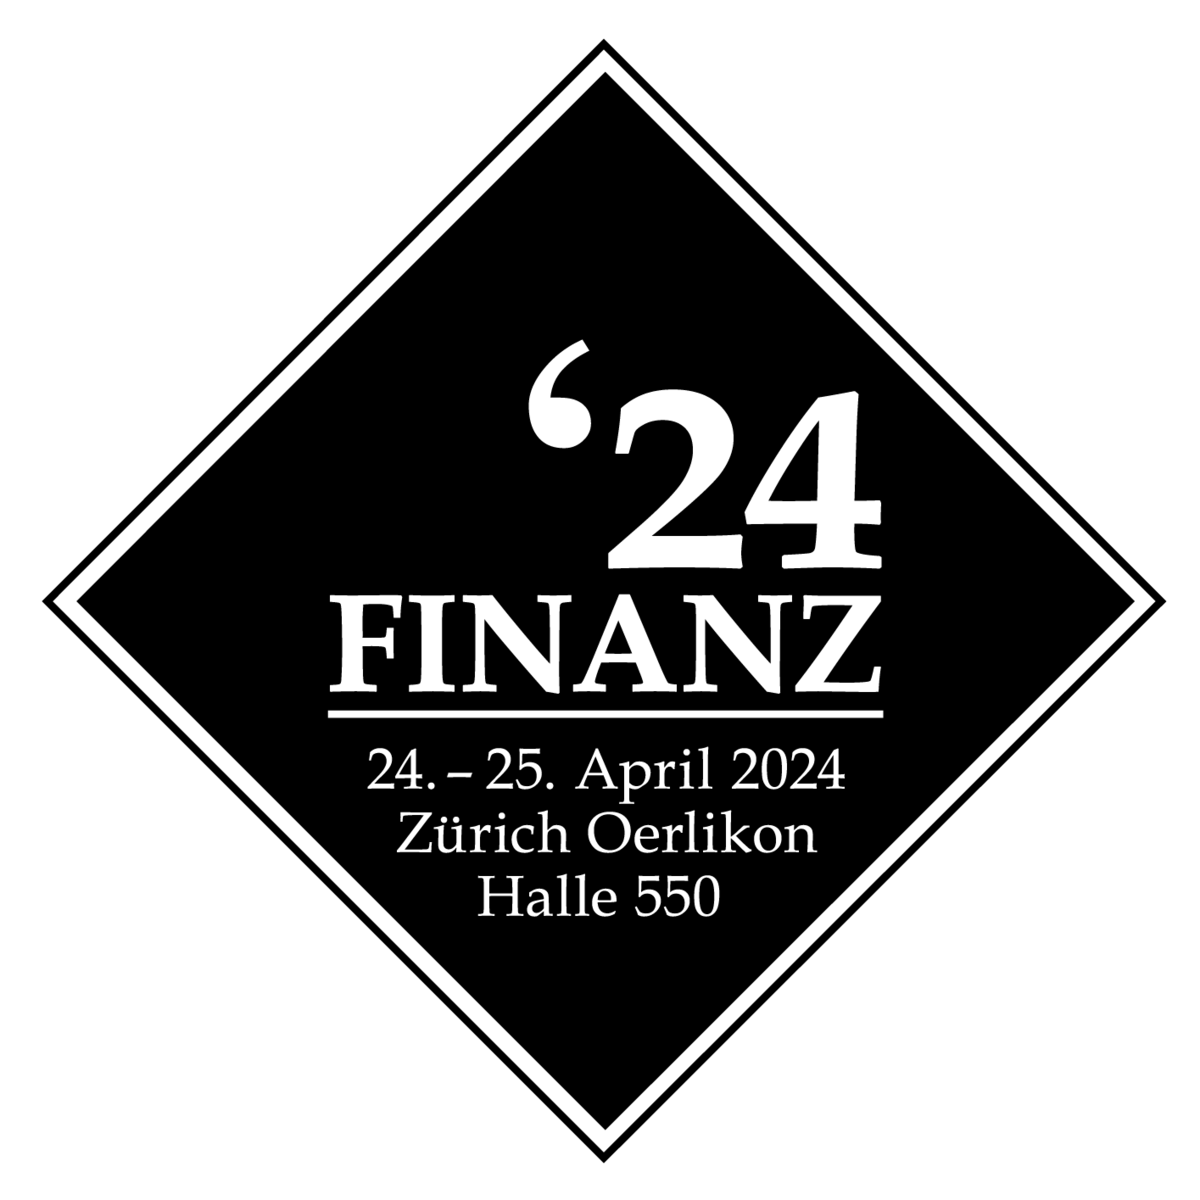 FINANZ'24, 24.-25.04.2024, Halle 550 Zürich Oerlikon